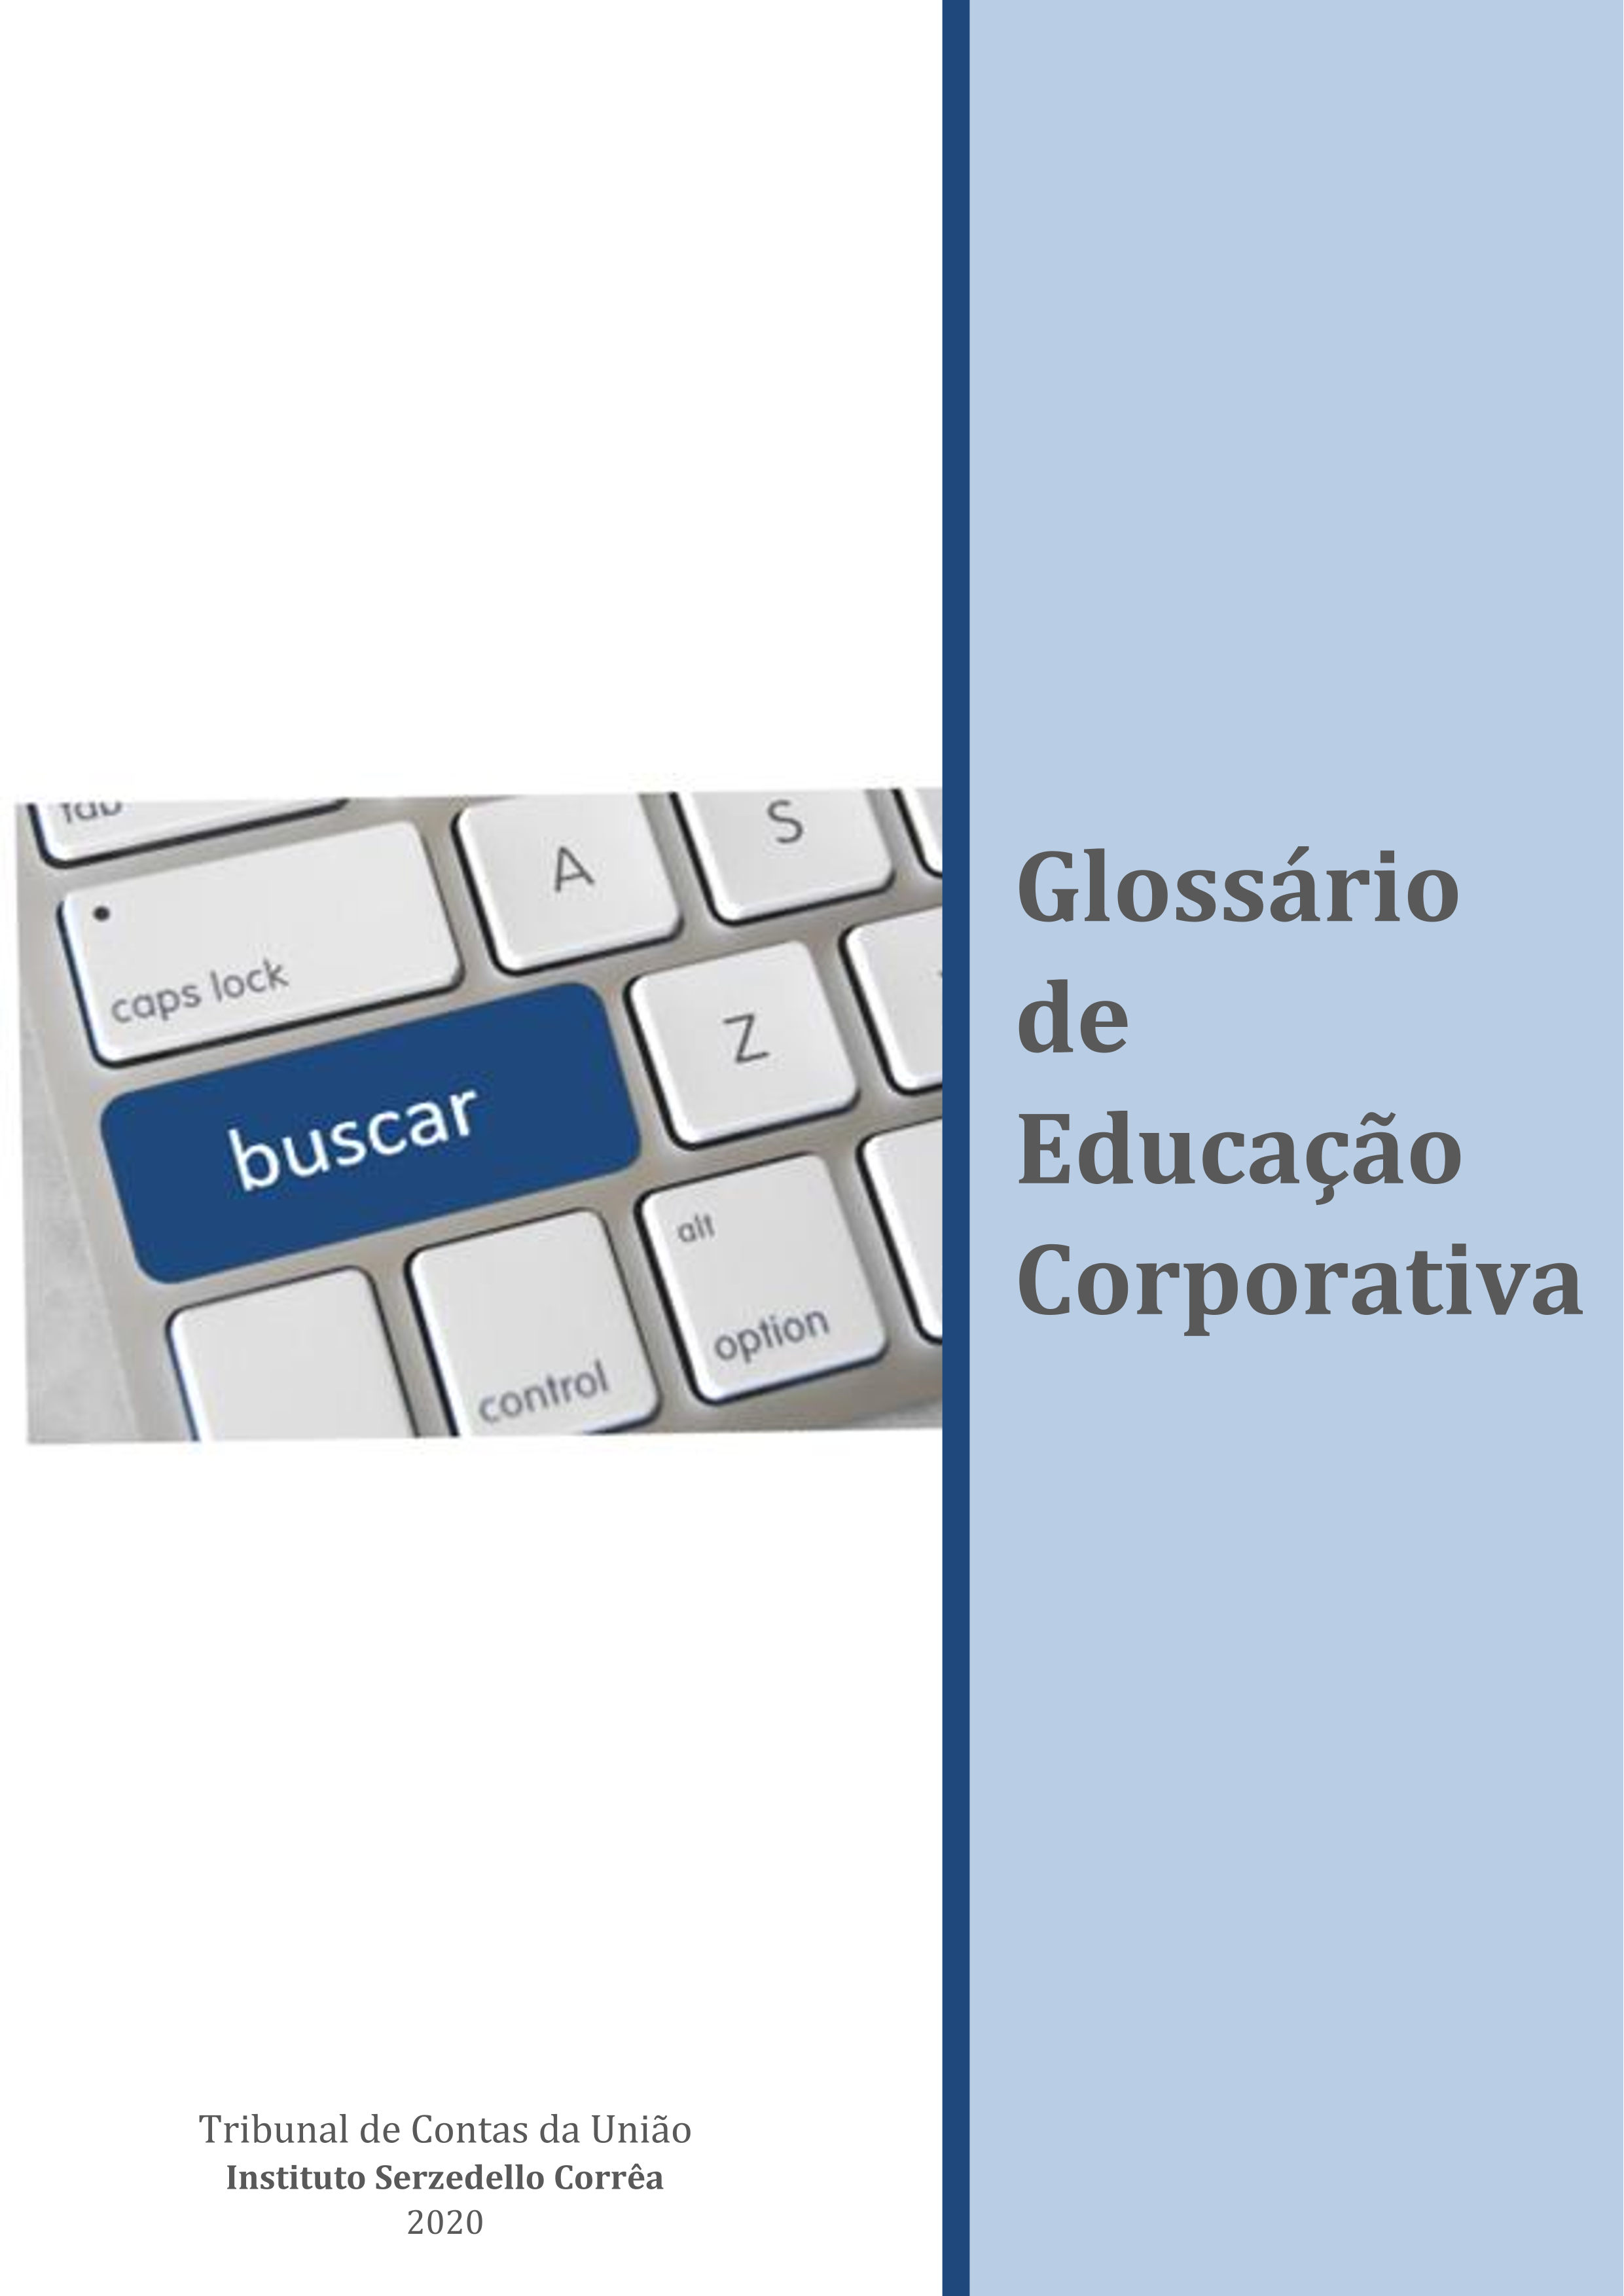 glossario-educacao-corporativa.png